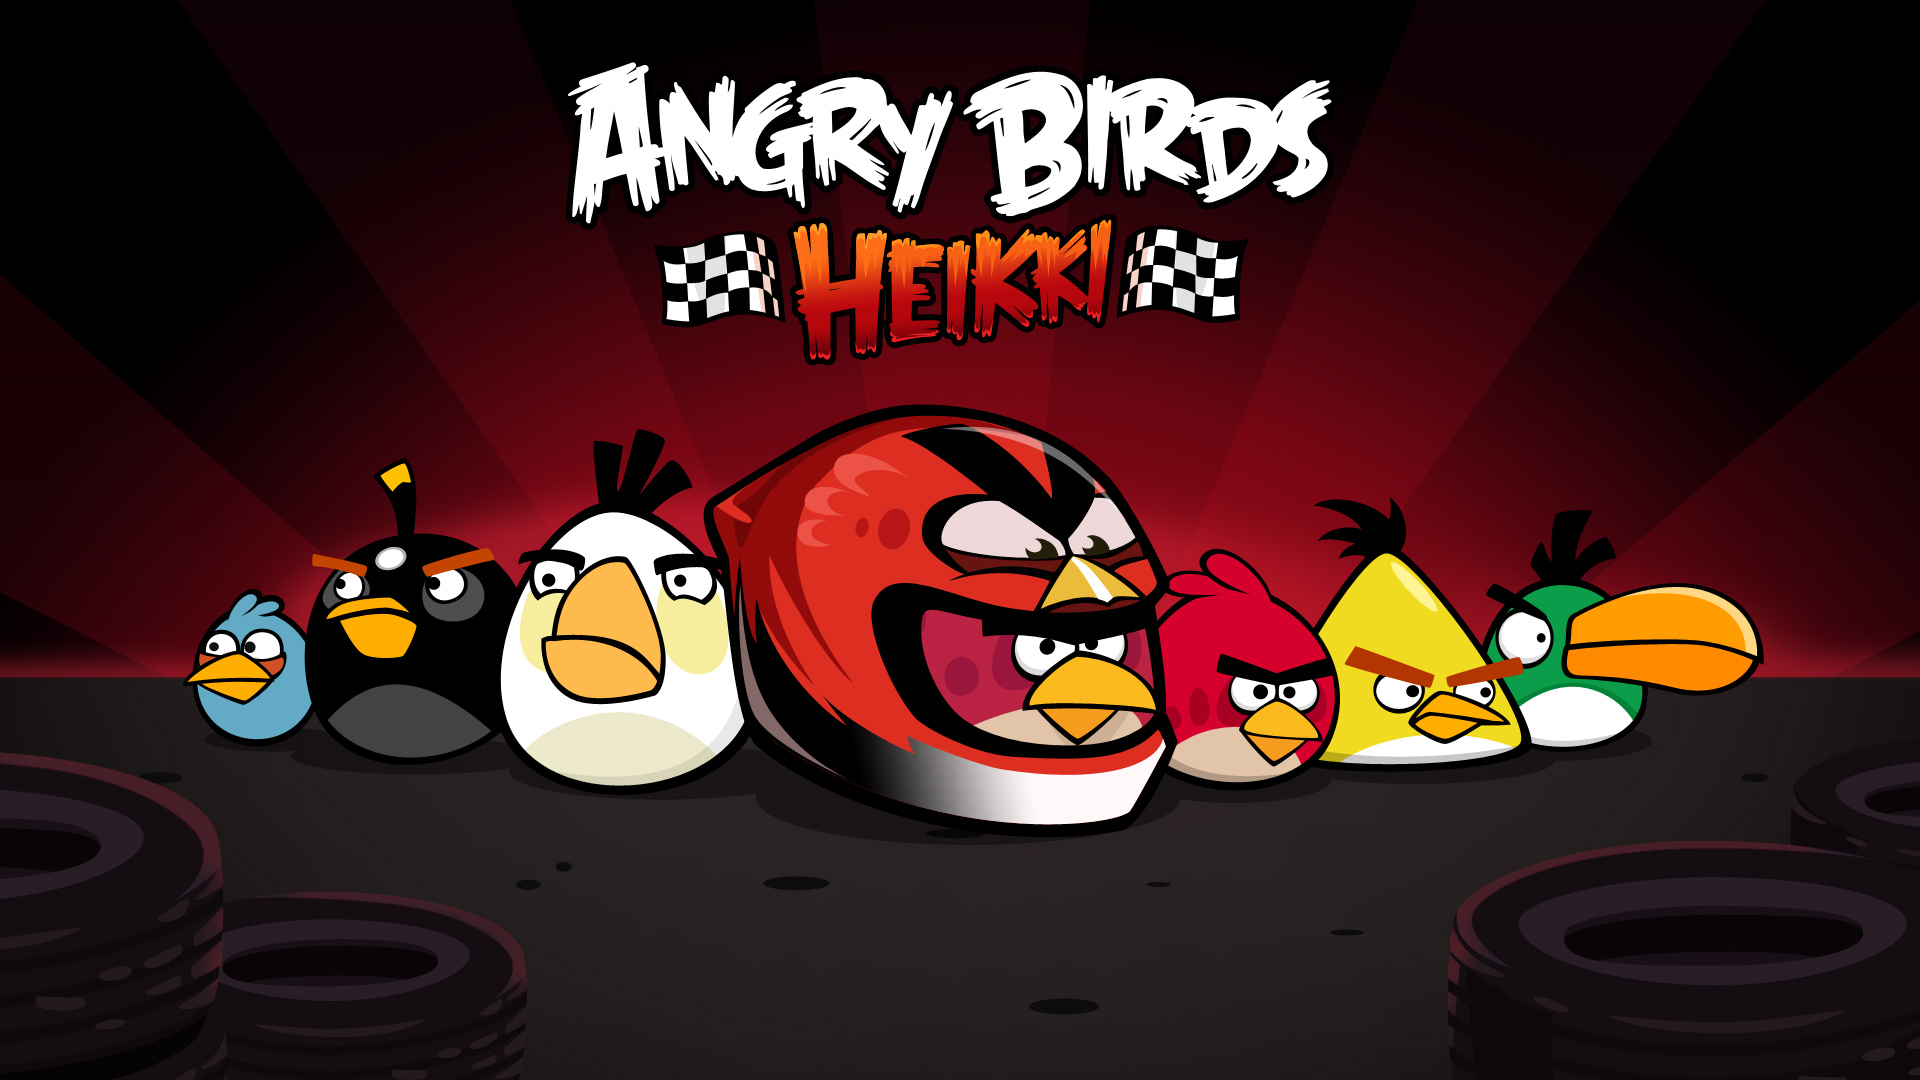 http://1.bp.blogspot.com/-pauY1Ls6YHM/T_XFTUy-W_I/AAAAAAAAD4c/y1ujjn3tN_s/d/all+team+angry+birds+Heikki+wallpaper+1920x1080.jpg